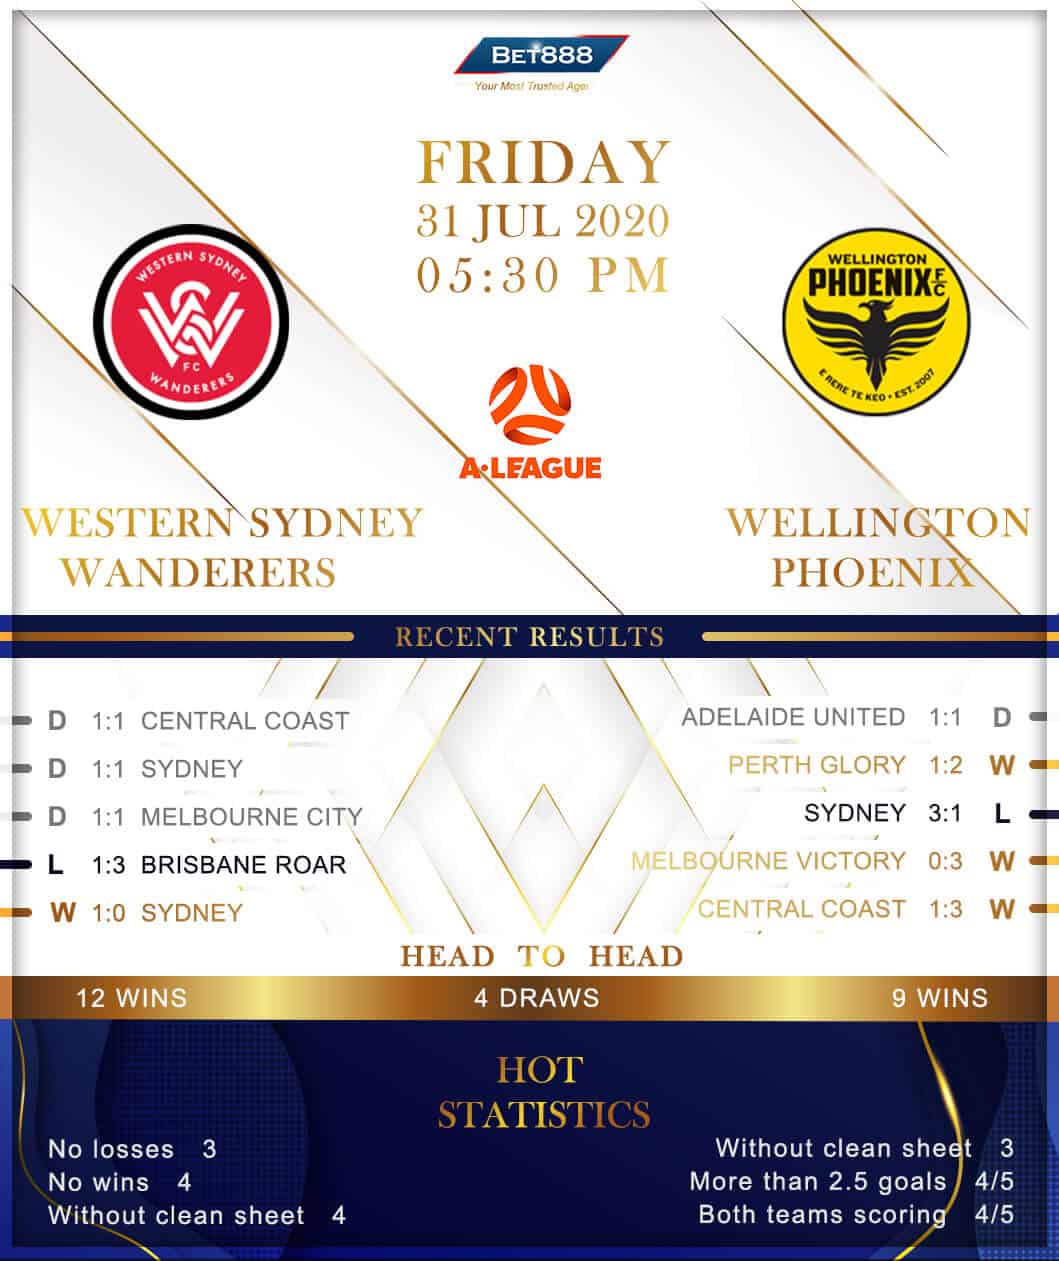 West Sydney Wanderers vs Wellington Phoenix 31/07/20